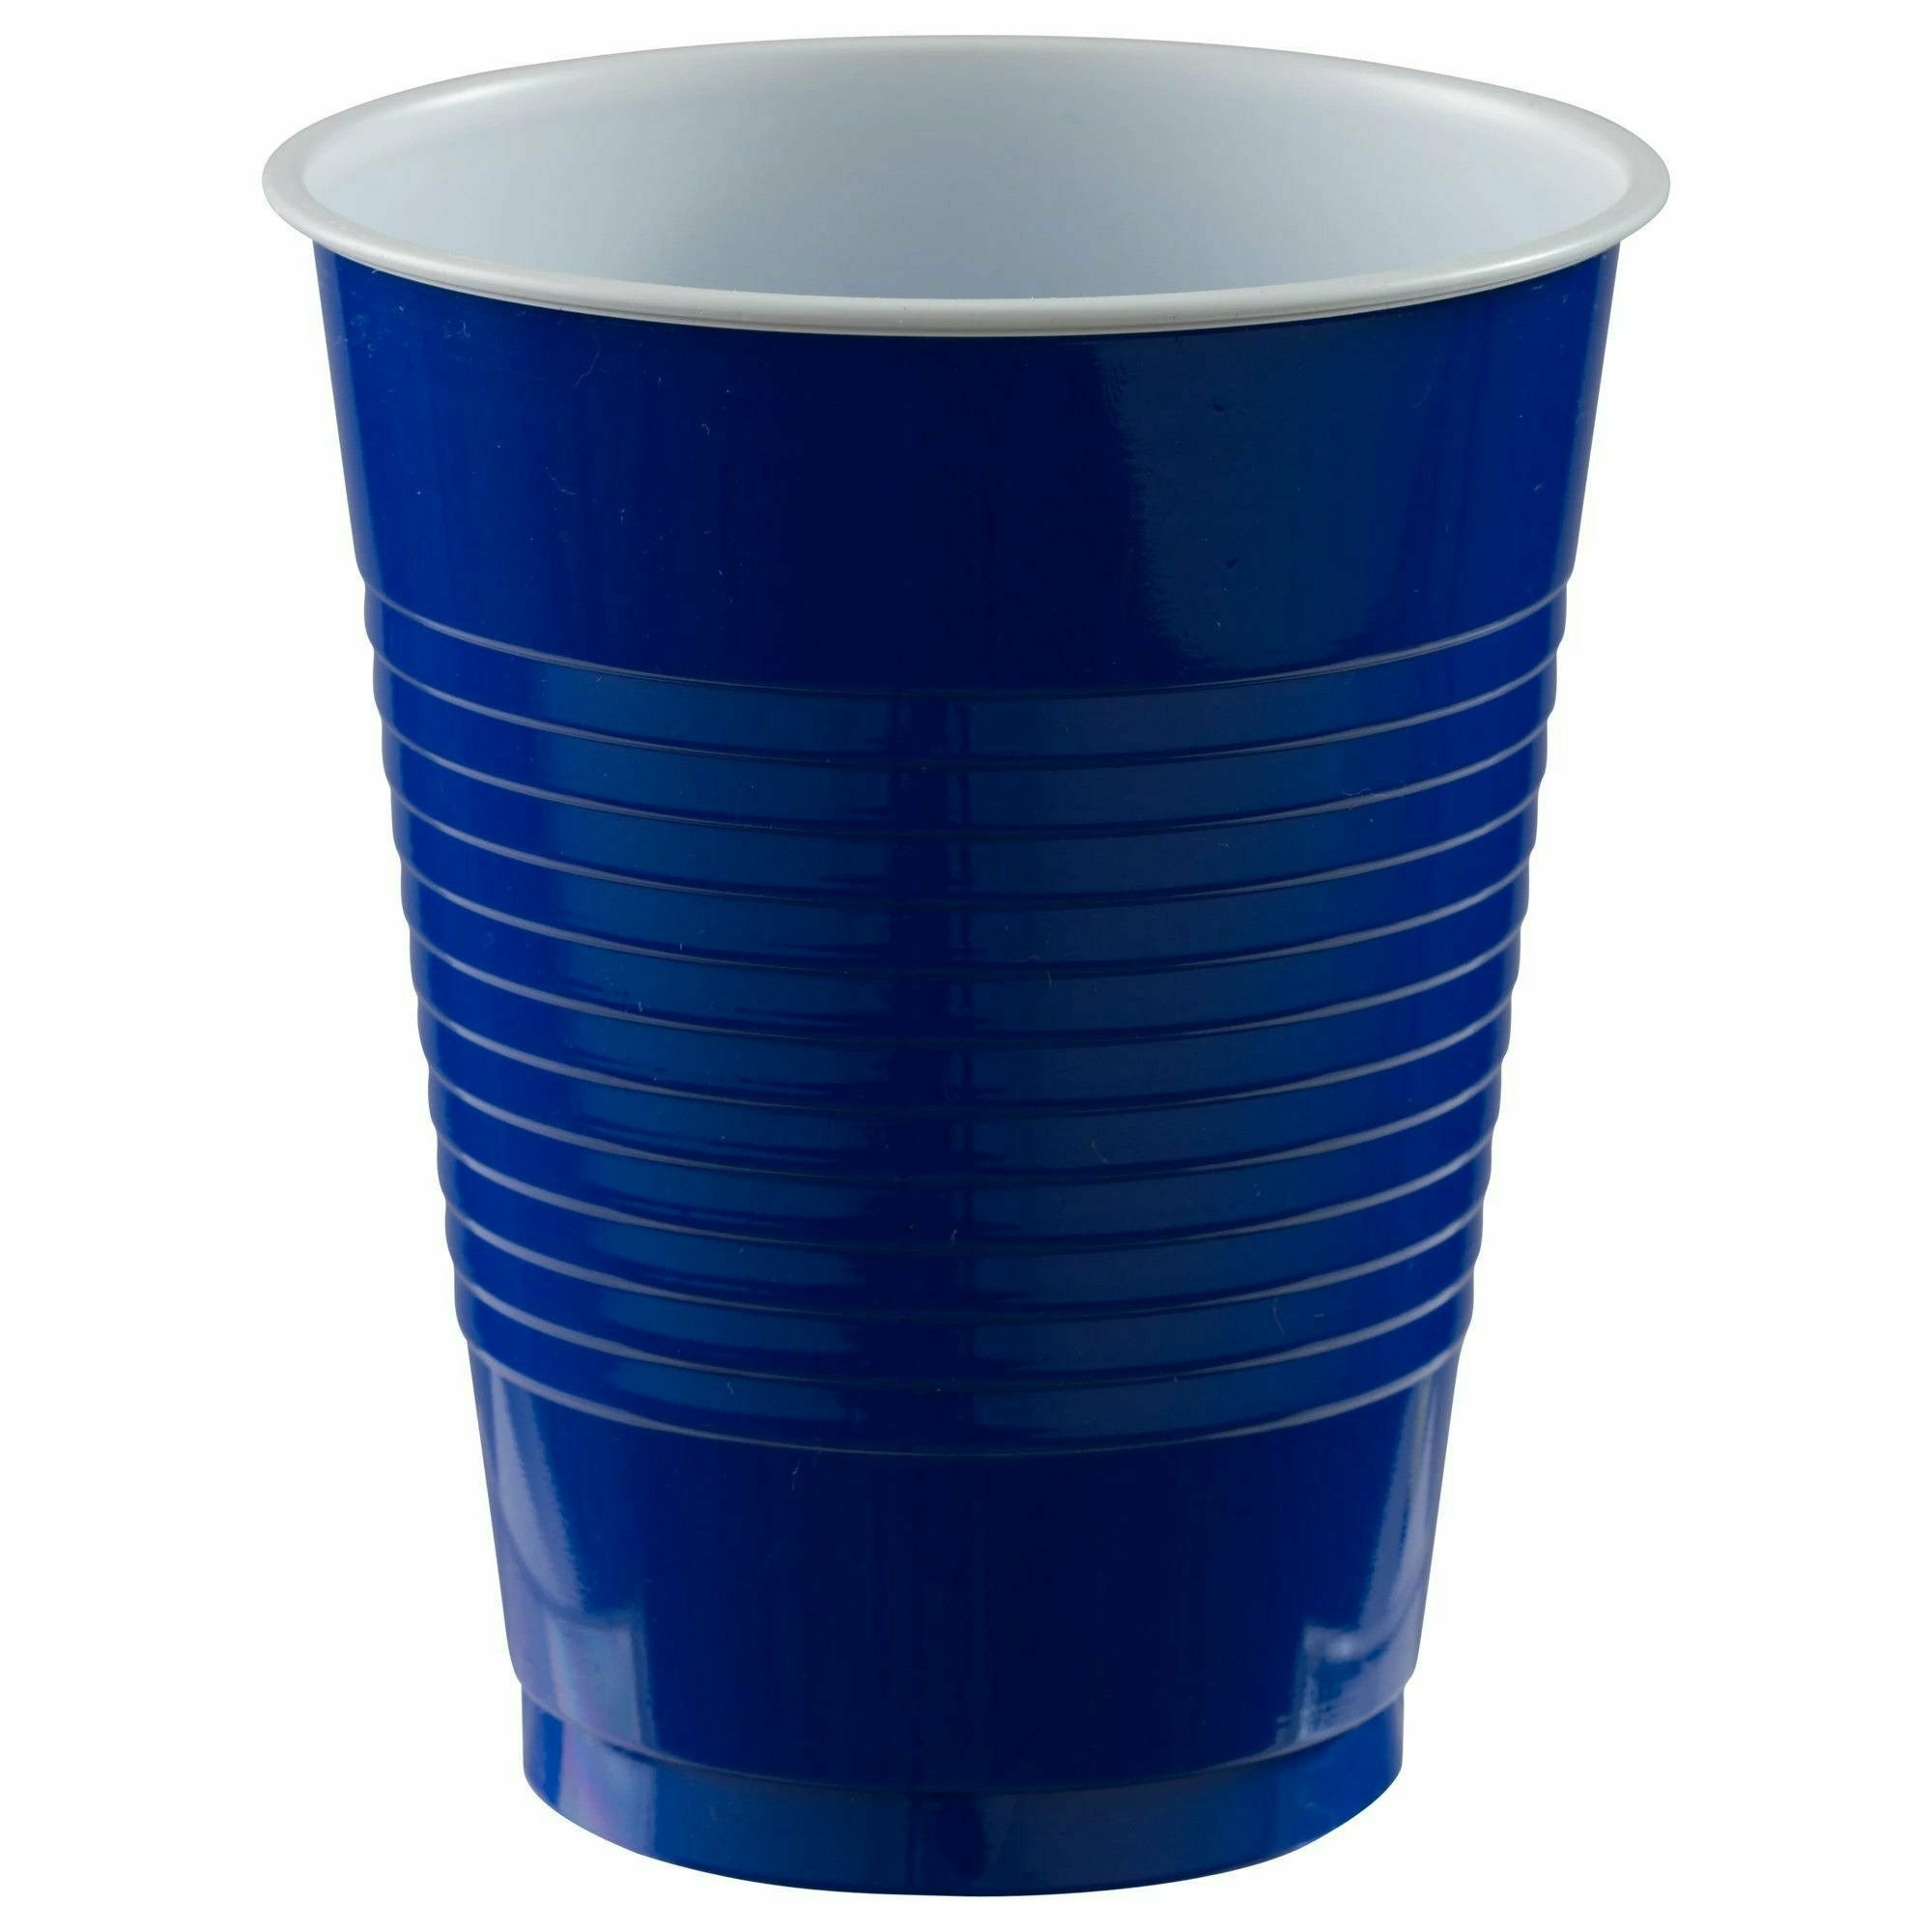 Amscan BASIC Bright Royal Blue - 18 oz. Plastic Cups, 50 Ct.